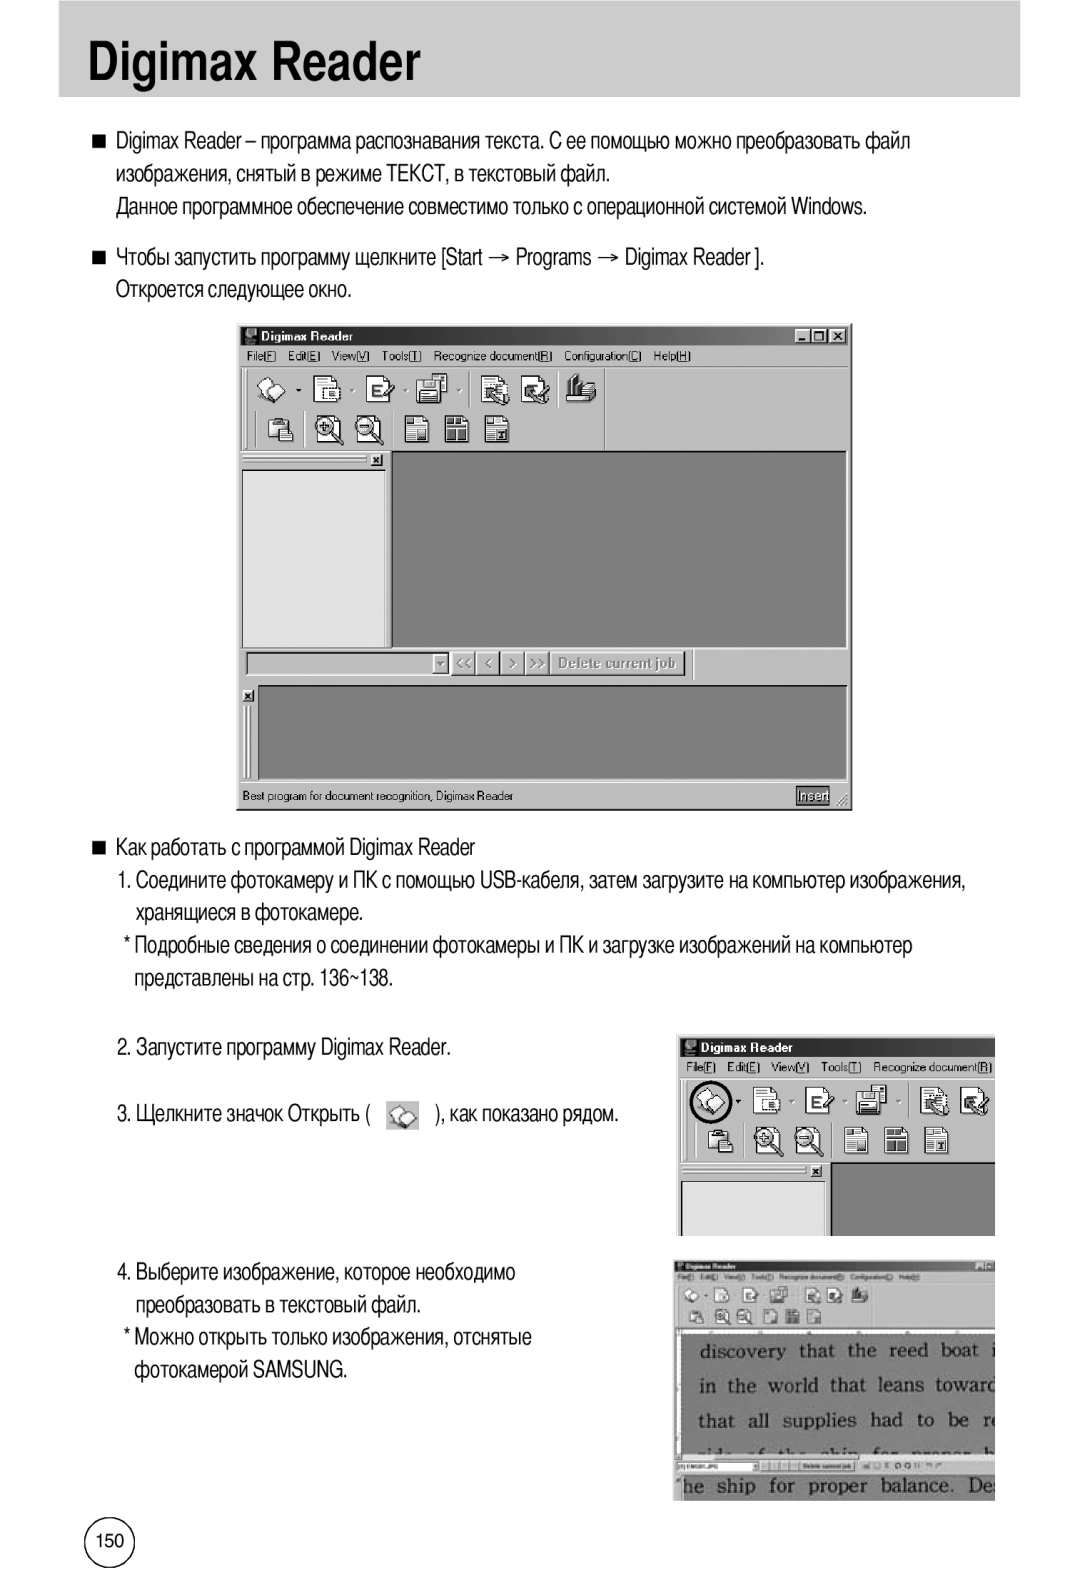 Samsung EC-I50ZZSBA/FR, EC-I50ZZBBA/FR → Programs → Digimax Reader Откроется следующее окно, хранящиеся в фотокамере 